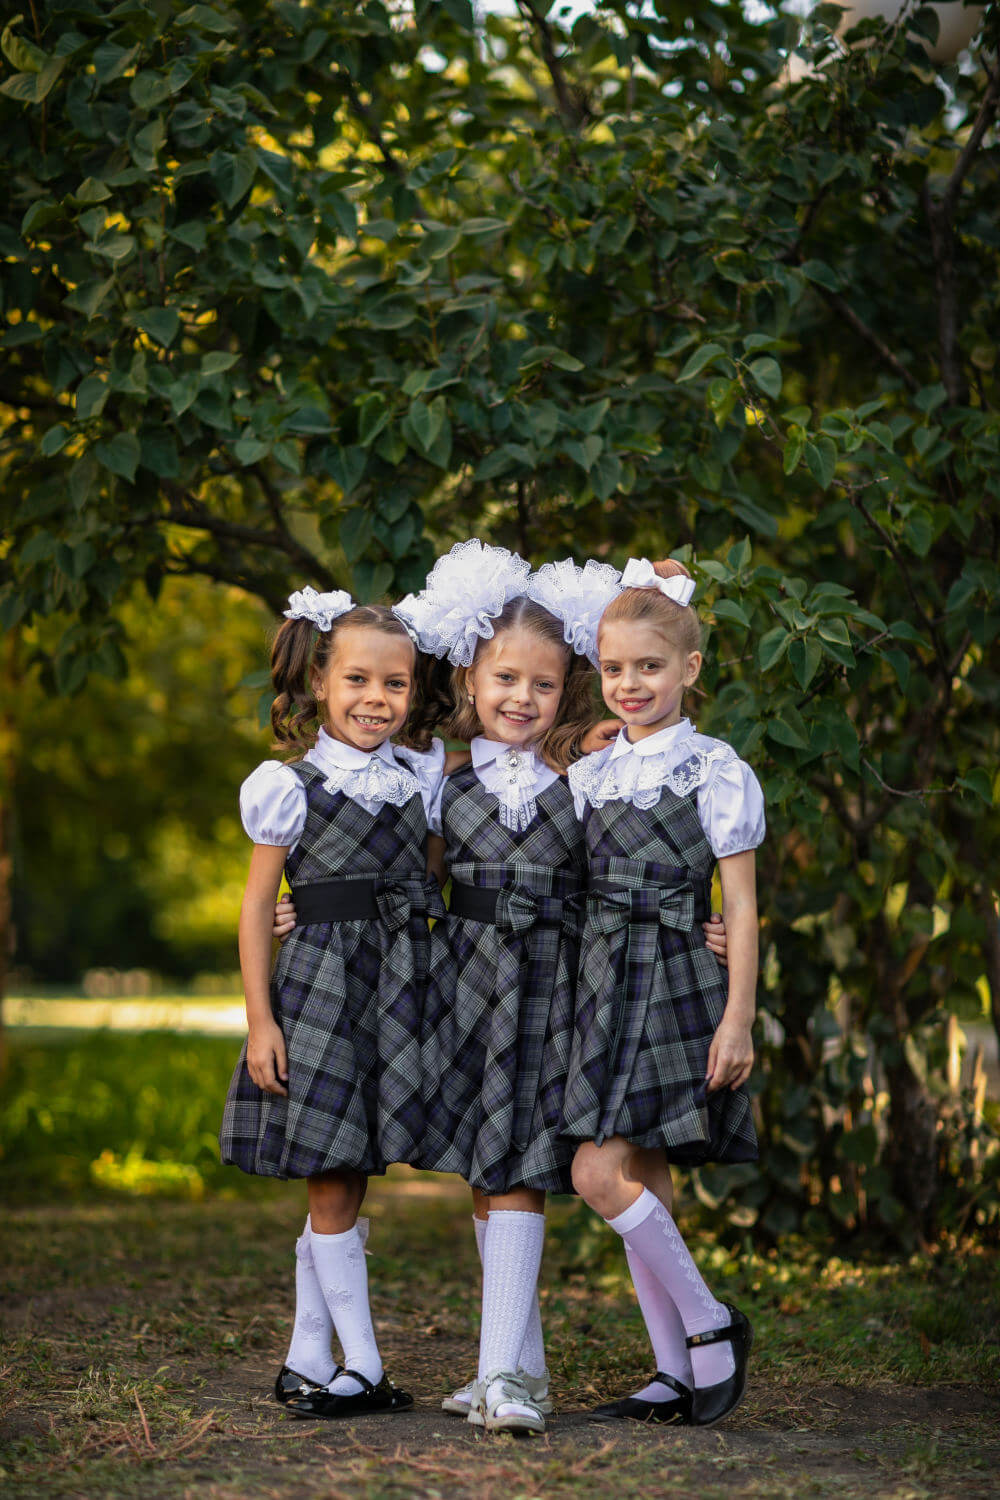 Three girls in school uniform